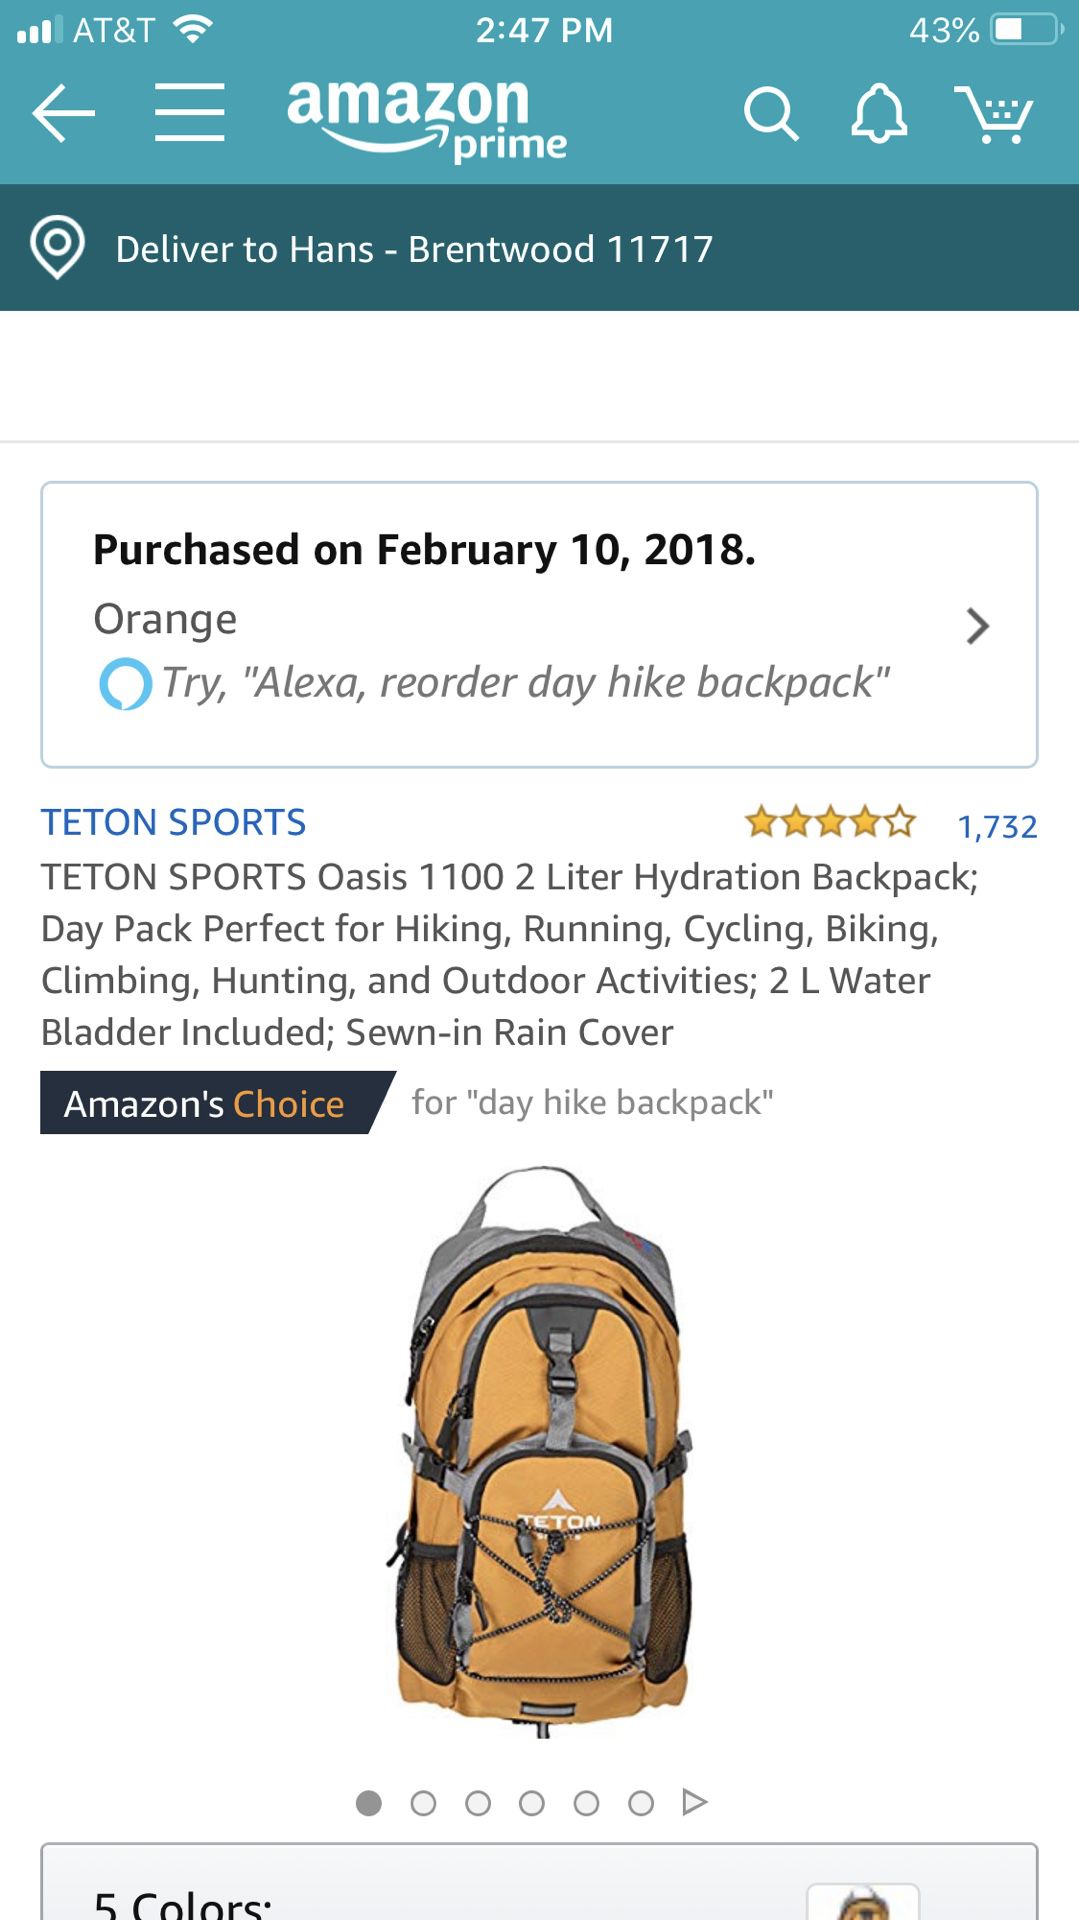 Teton sports oasis 1100 2 liter hydration backpack